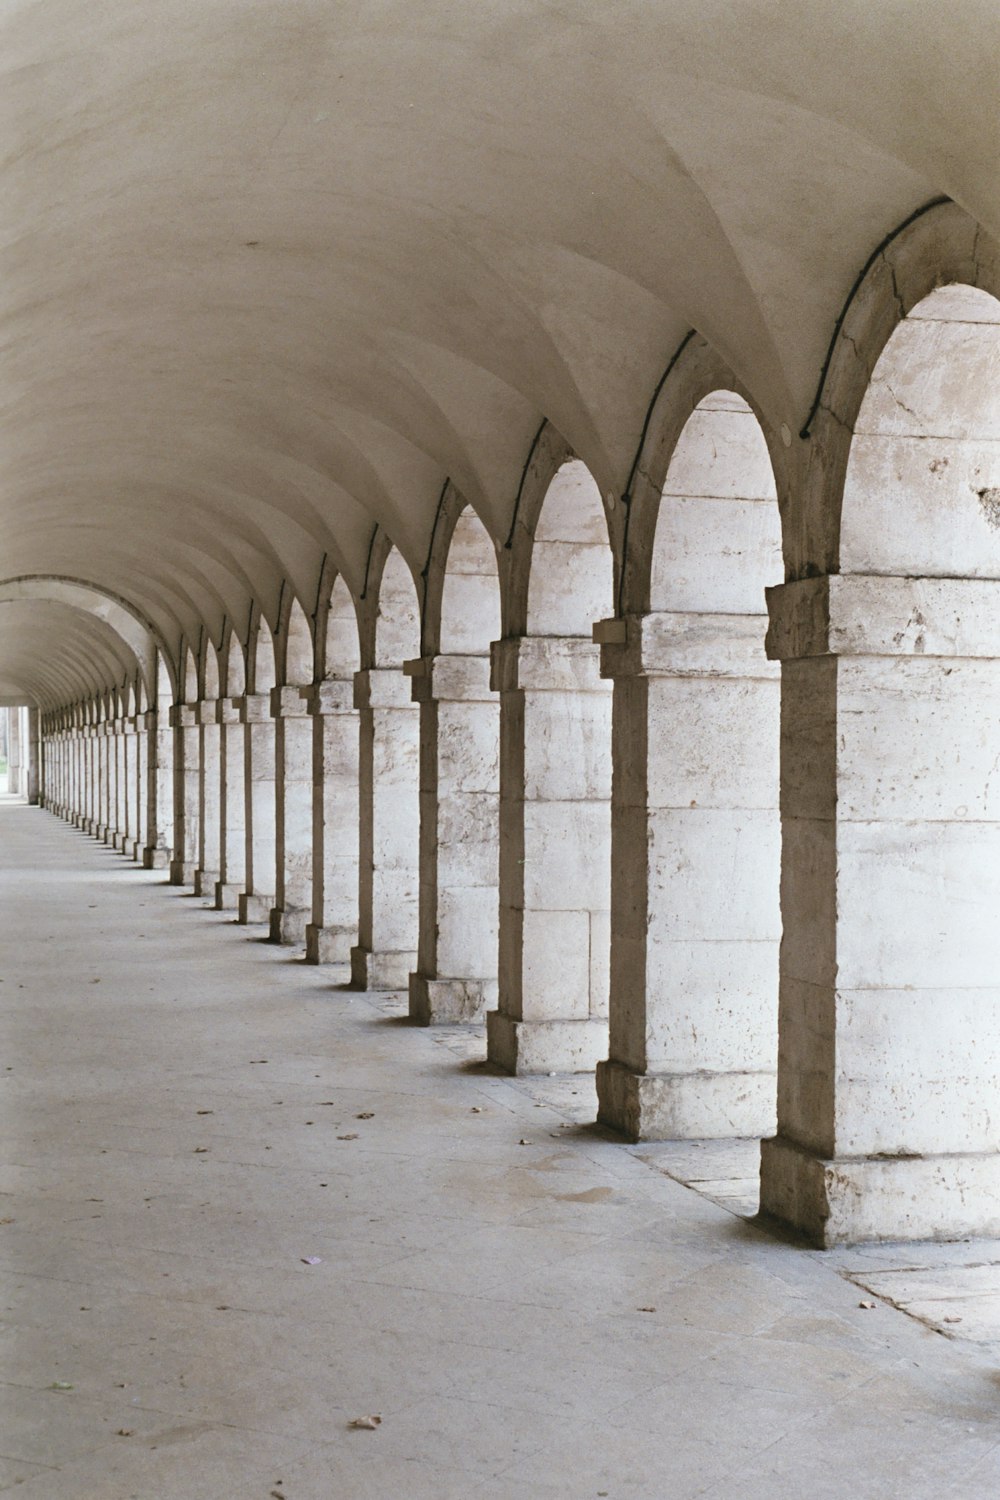 a concrete hallway with pillars